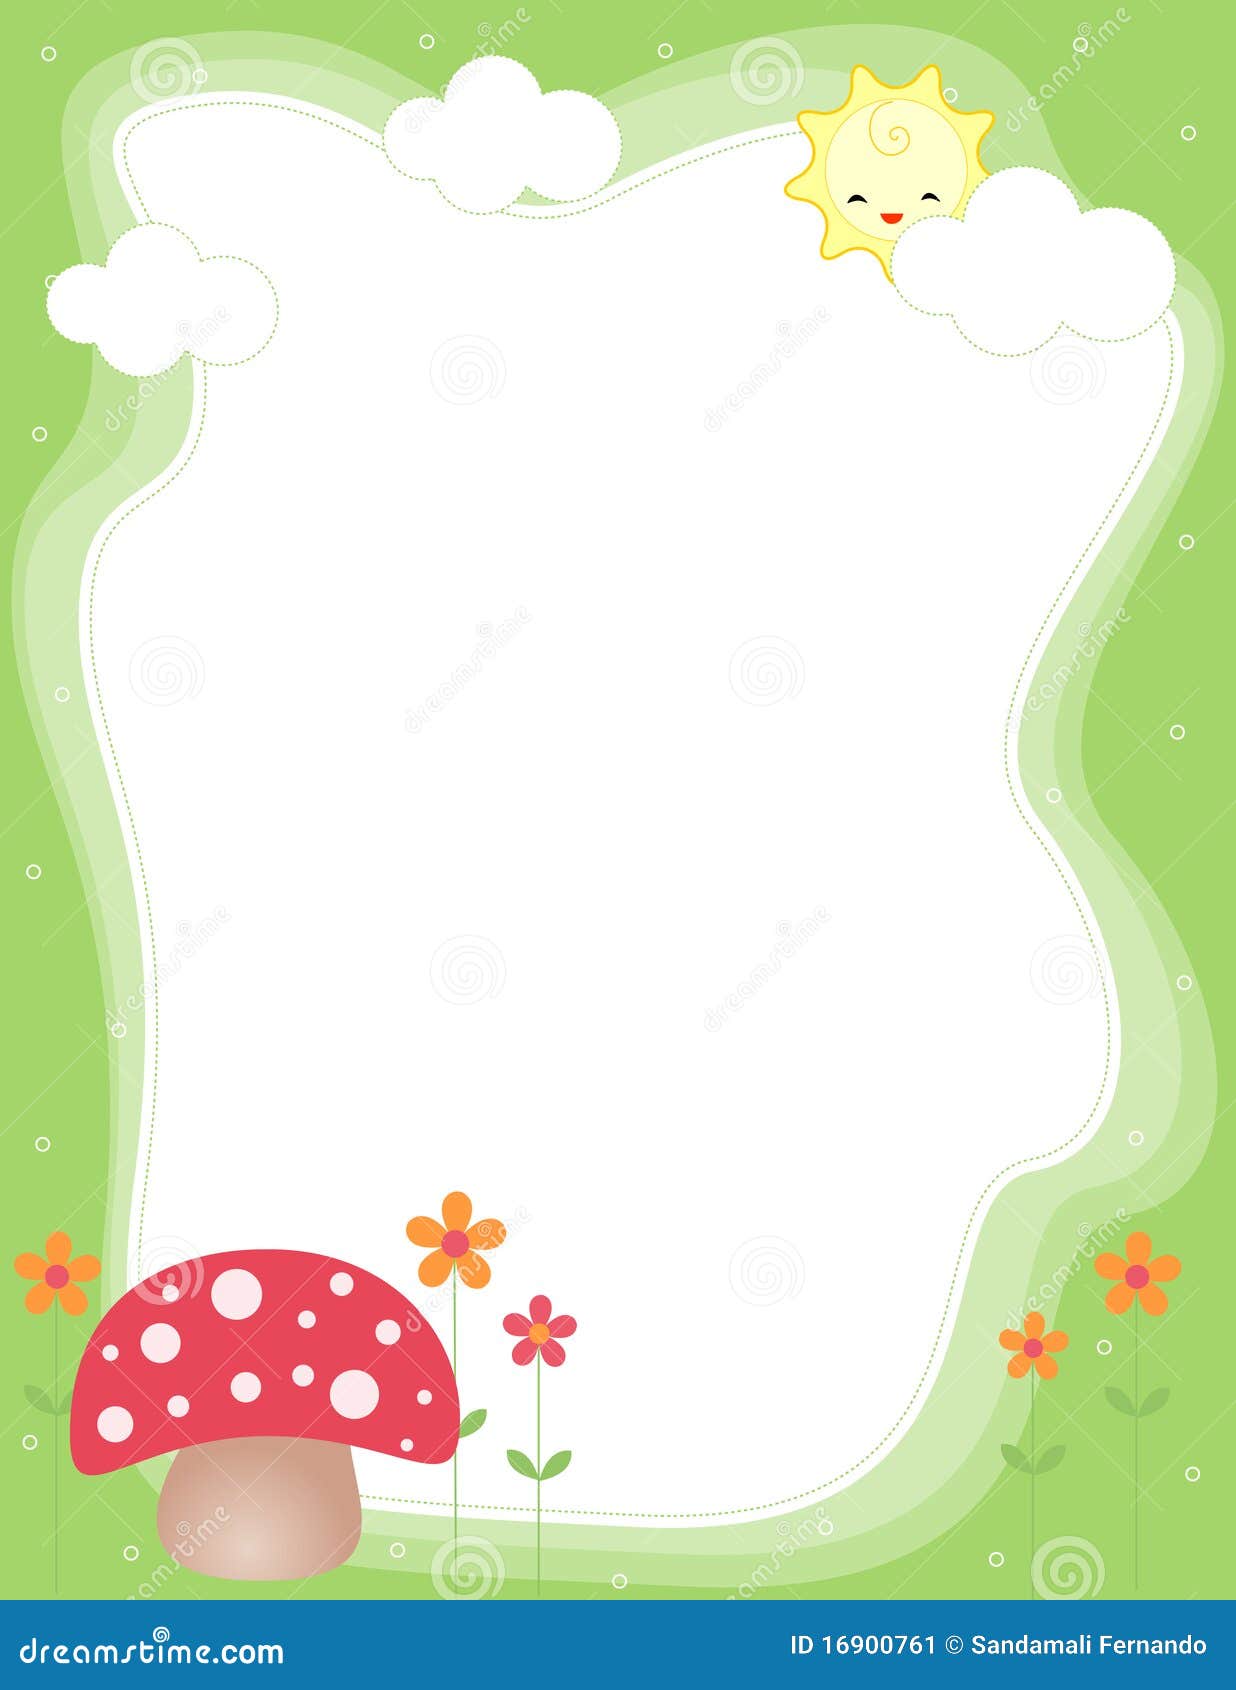 Cute Spring Border / Frame Stock Image - Image: 16900761